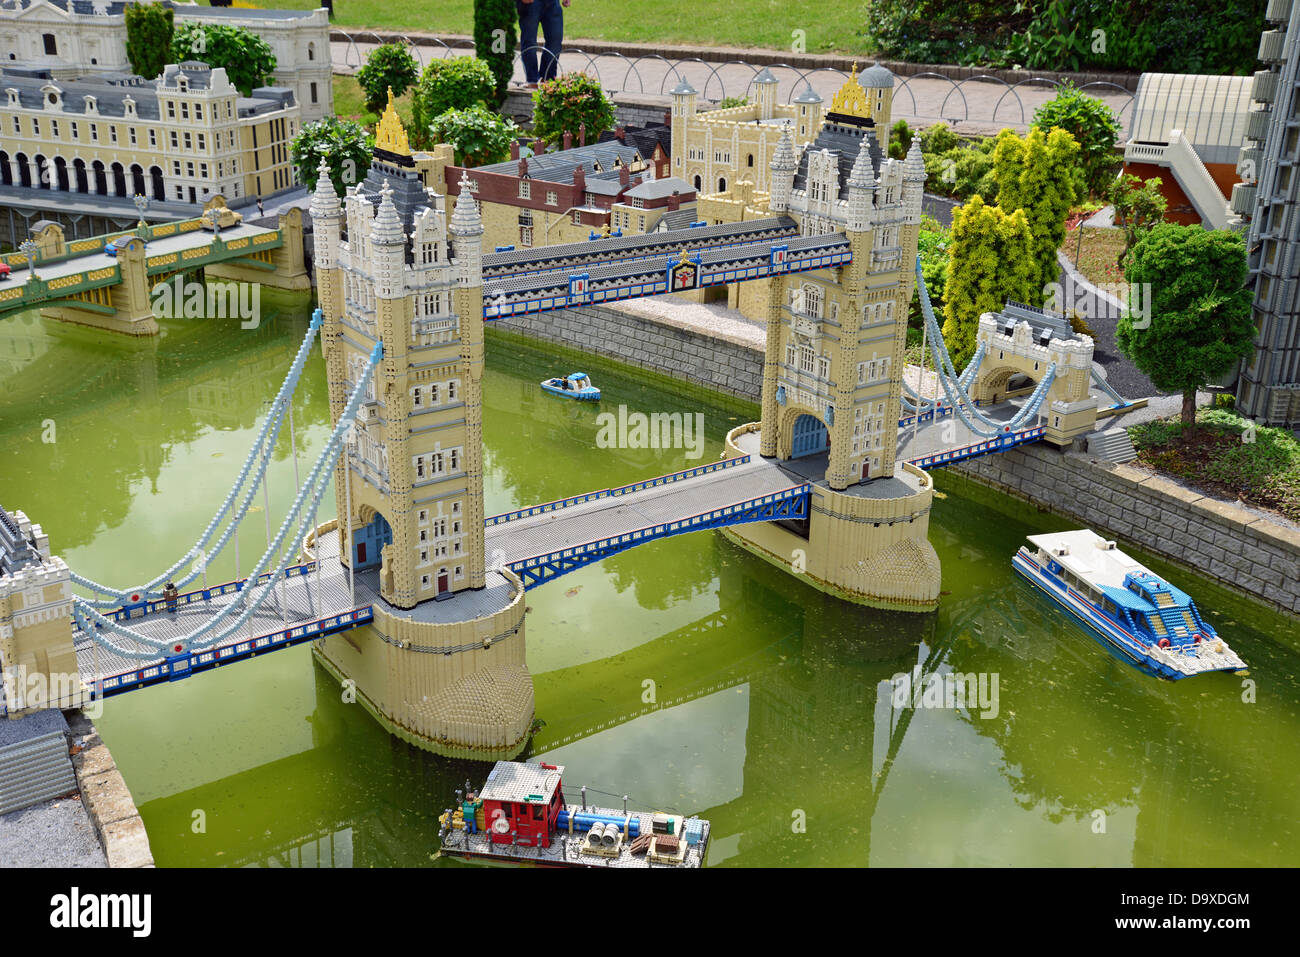 Lego london bridge hi-res stock photography and images - Alamy